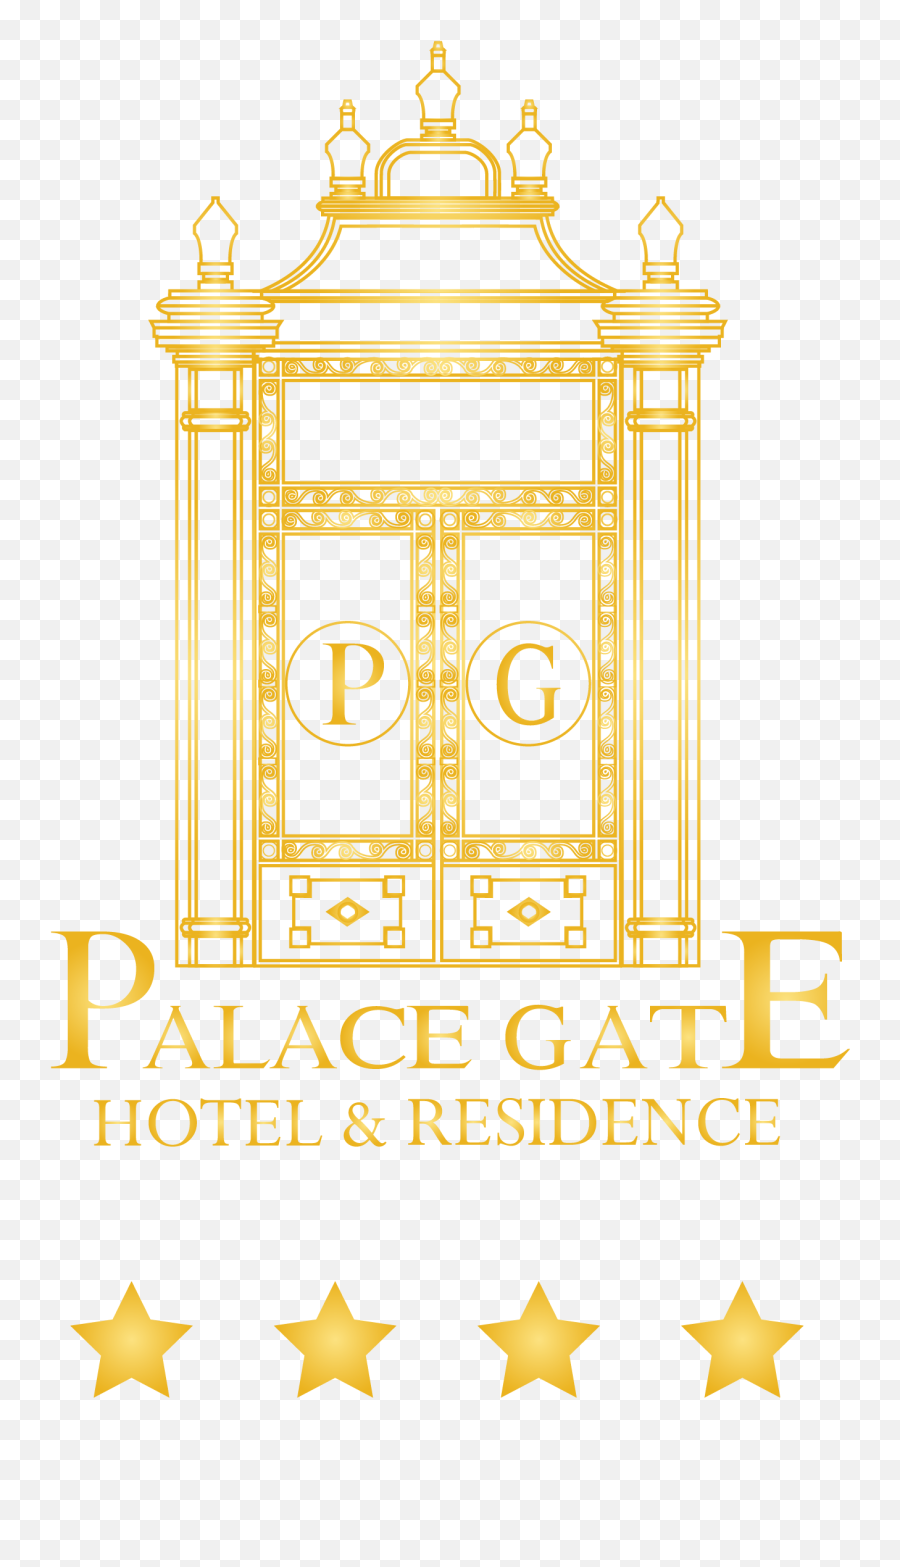 Dining Palace Gate Hotel U0026 Residence - Palace Gate Hotel Resort Logo Emoji,Dishes Emoji